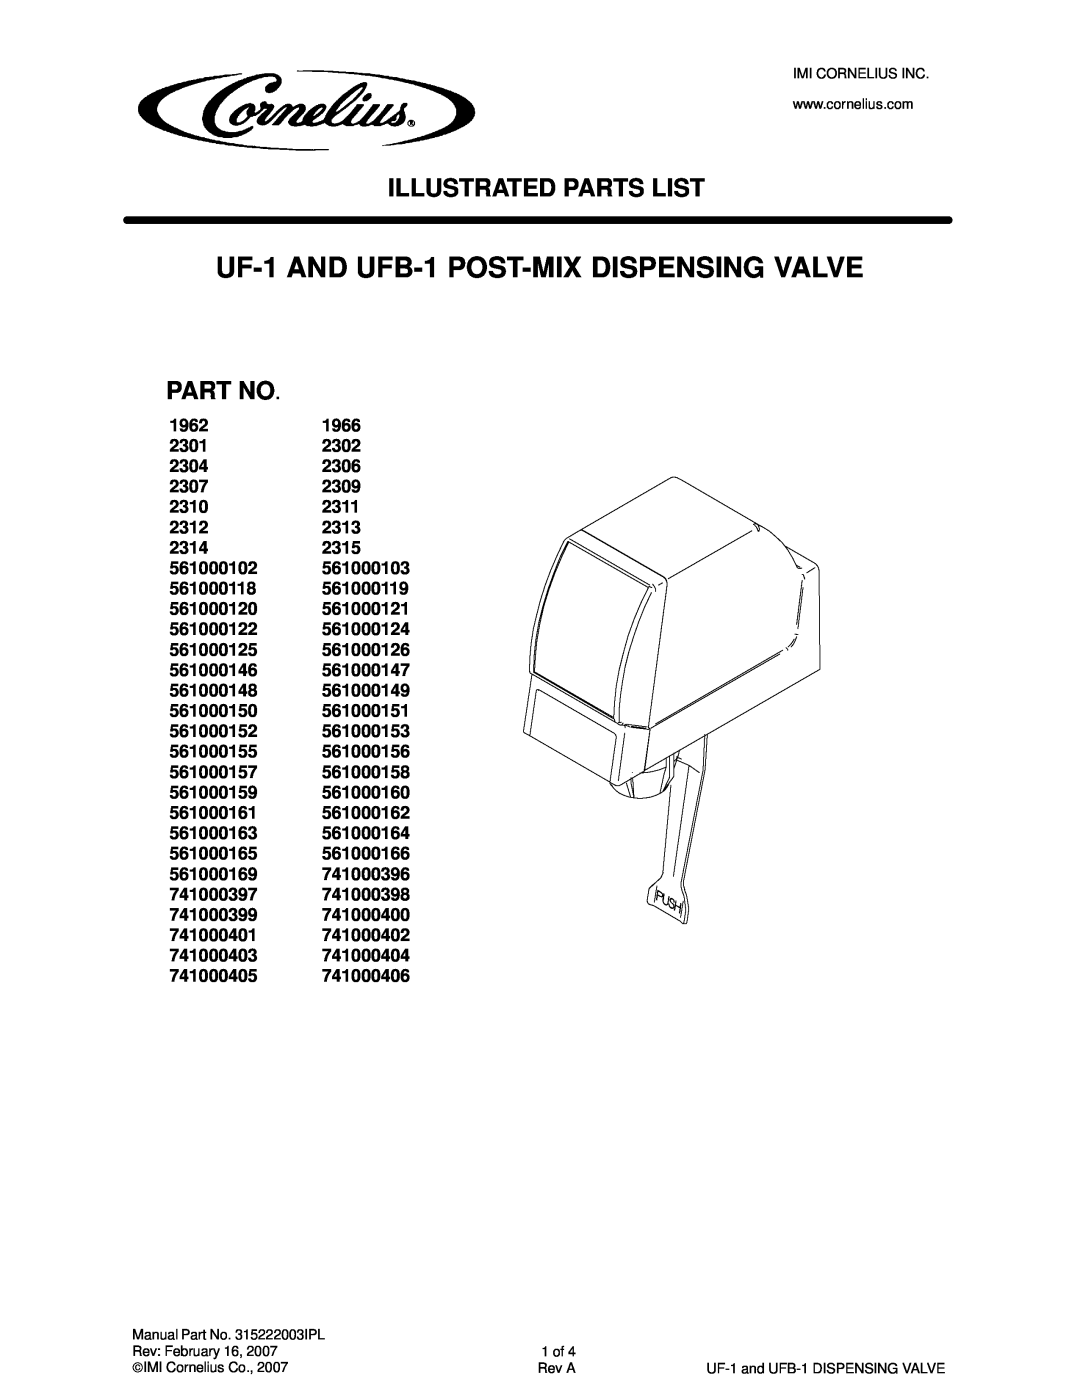 Panasonic manual UF-1AND UFB-1 POST-MIXDISPENSING VALVE, Illustrated Parts List 